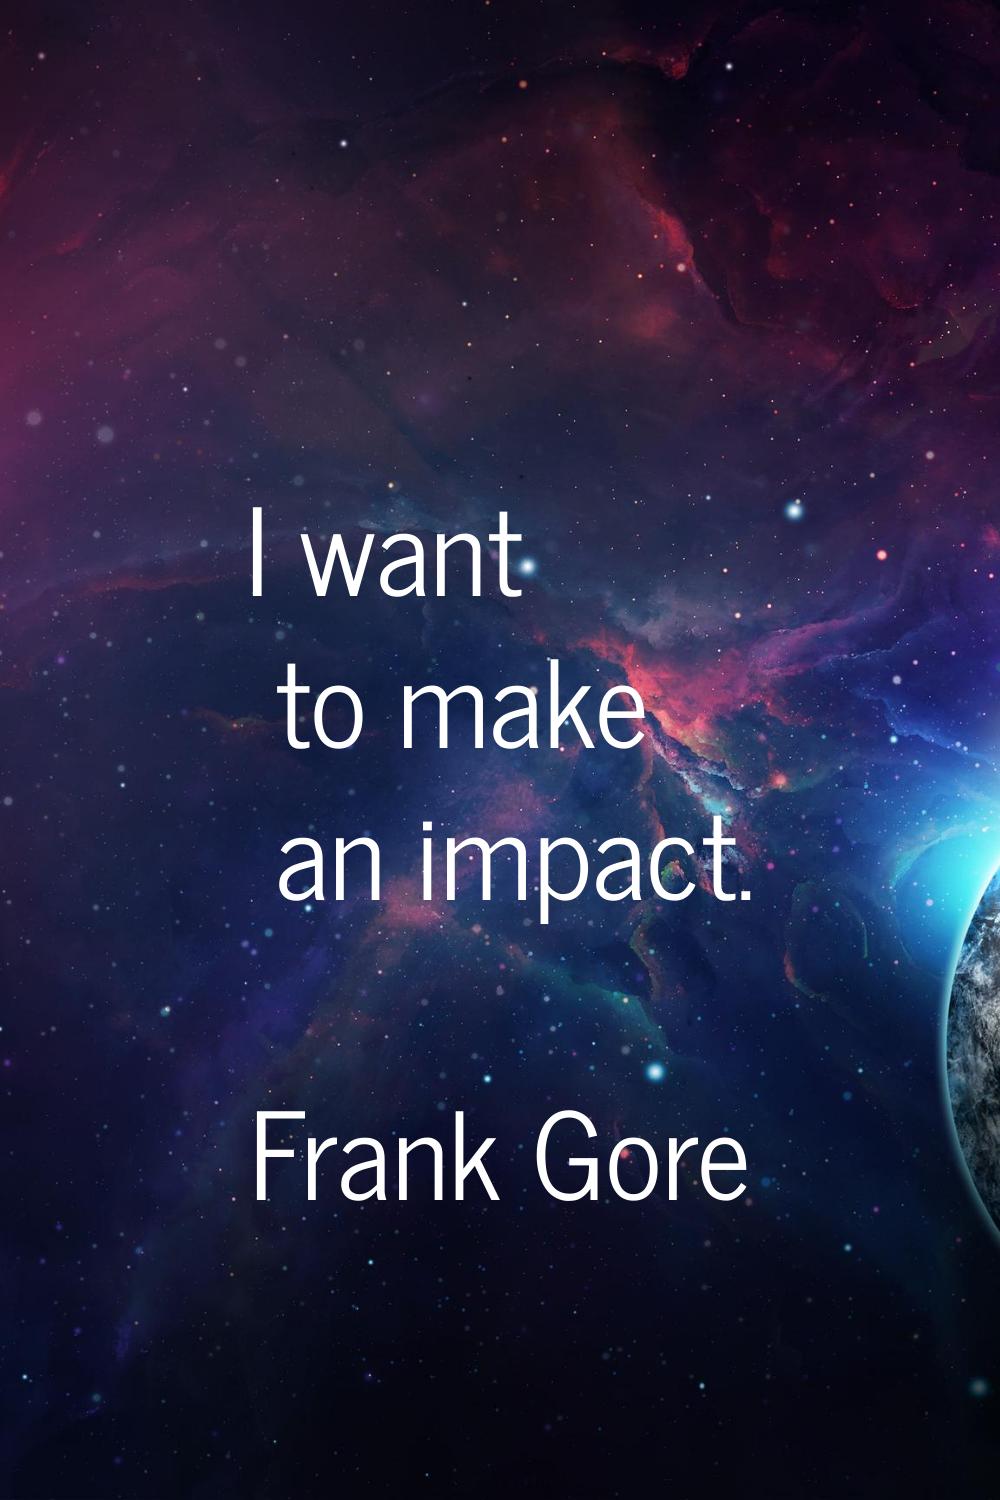 I want to make an impact.